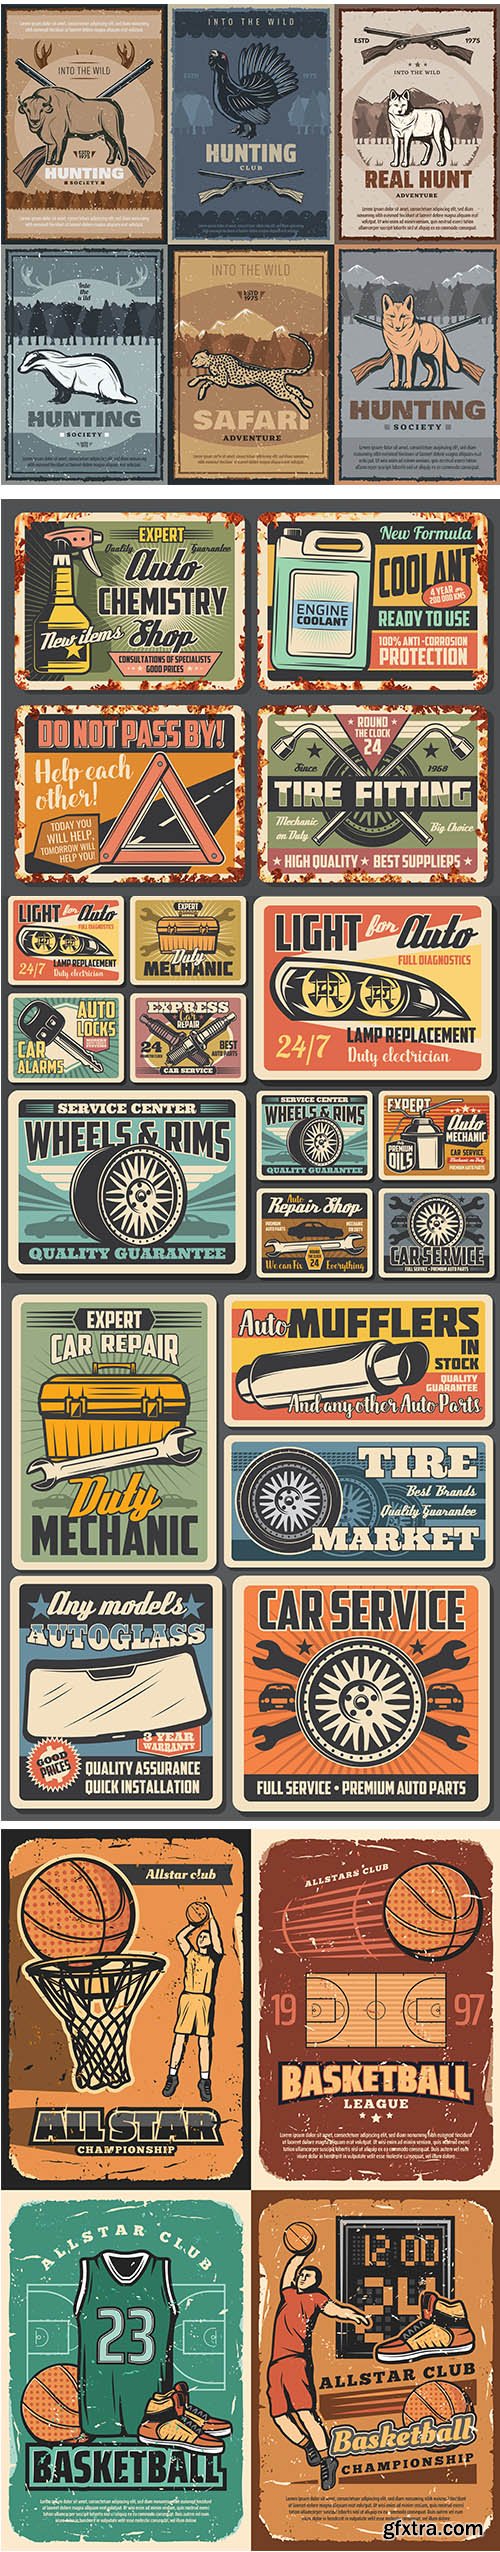 Vintage Sports and Cars Illustration